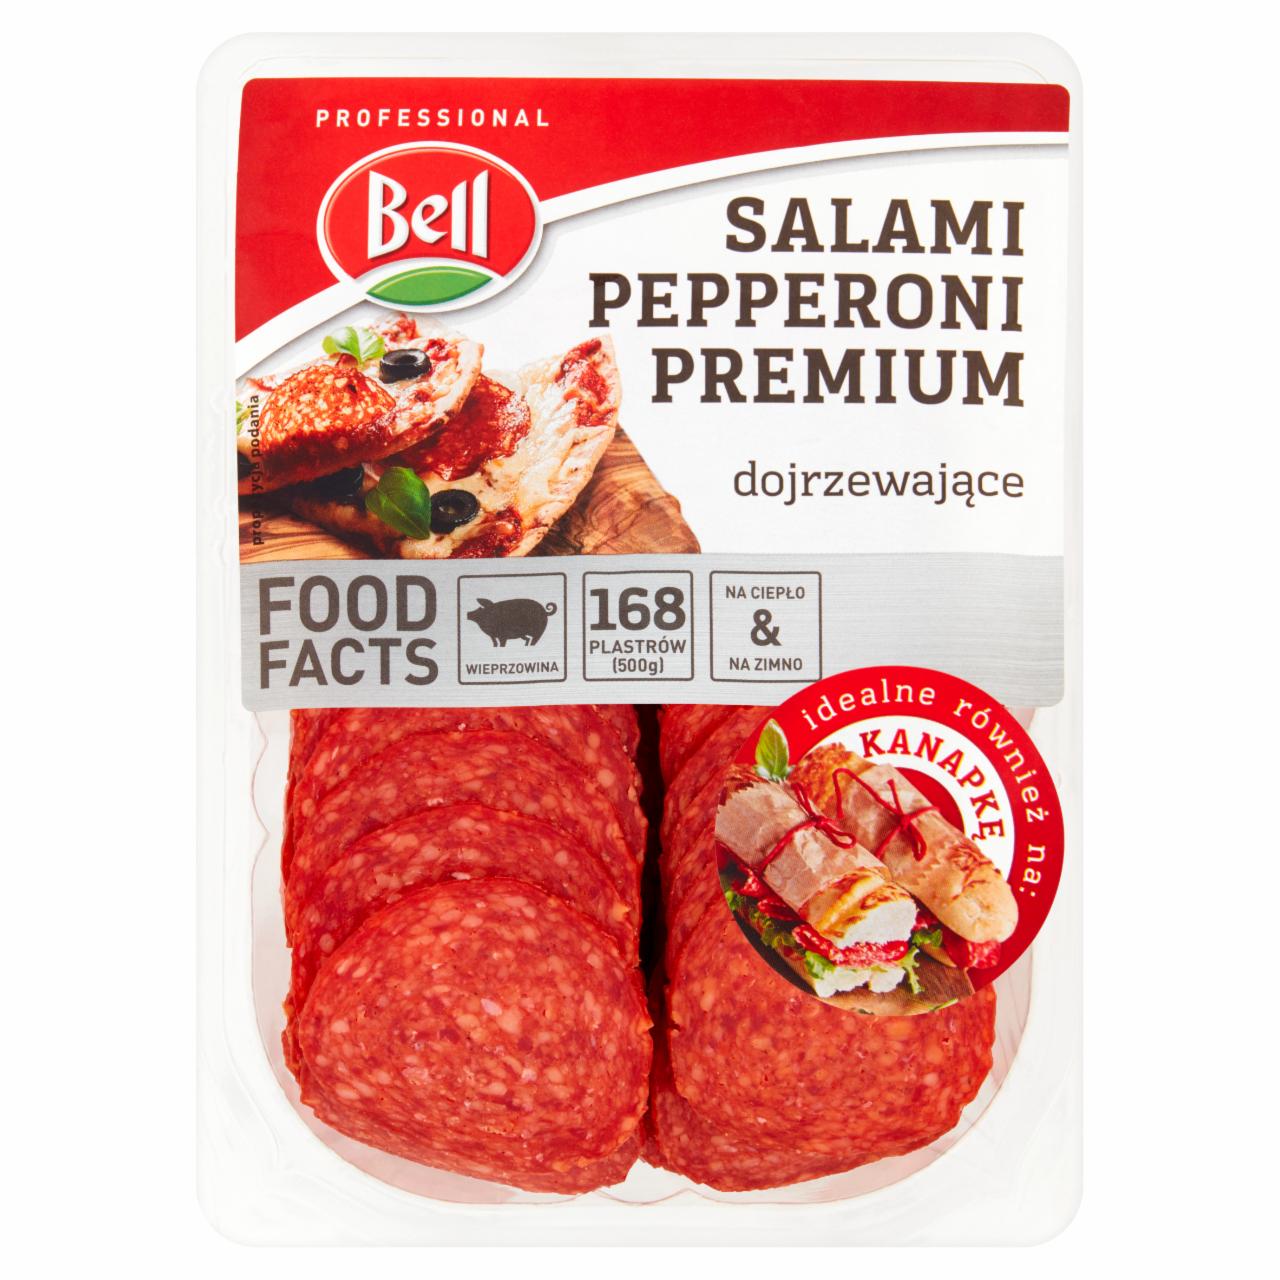 Zdjęcia - Bell Salami Premium dojrzewające pepperoni 500 g